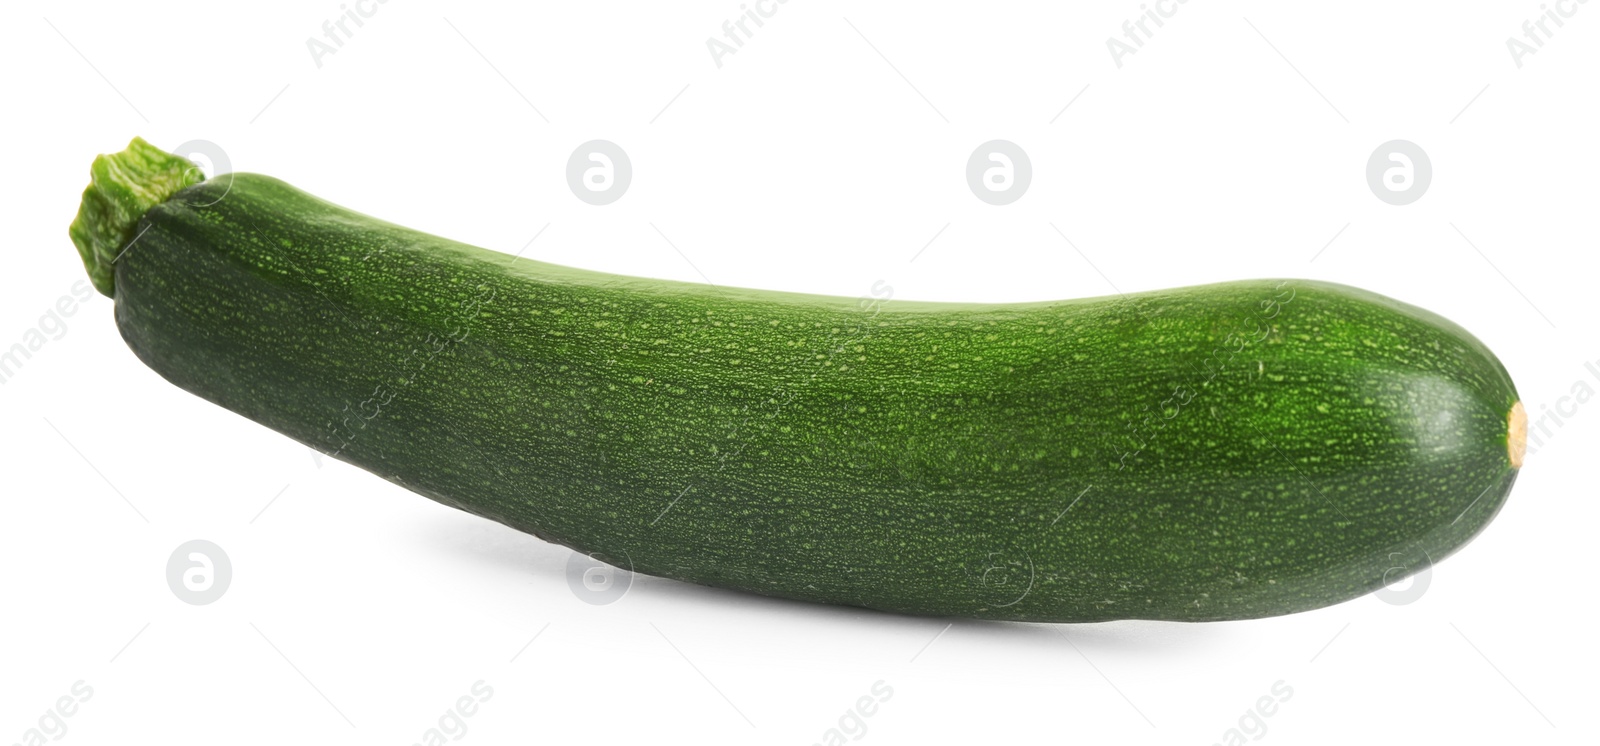 Photo of Fresh ripe green zucchini isolated on white